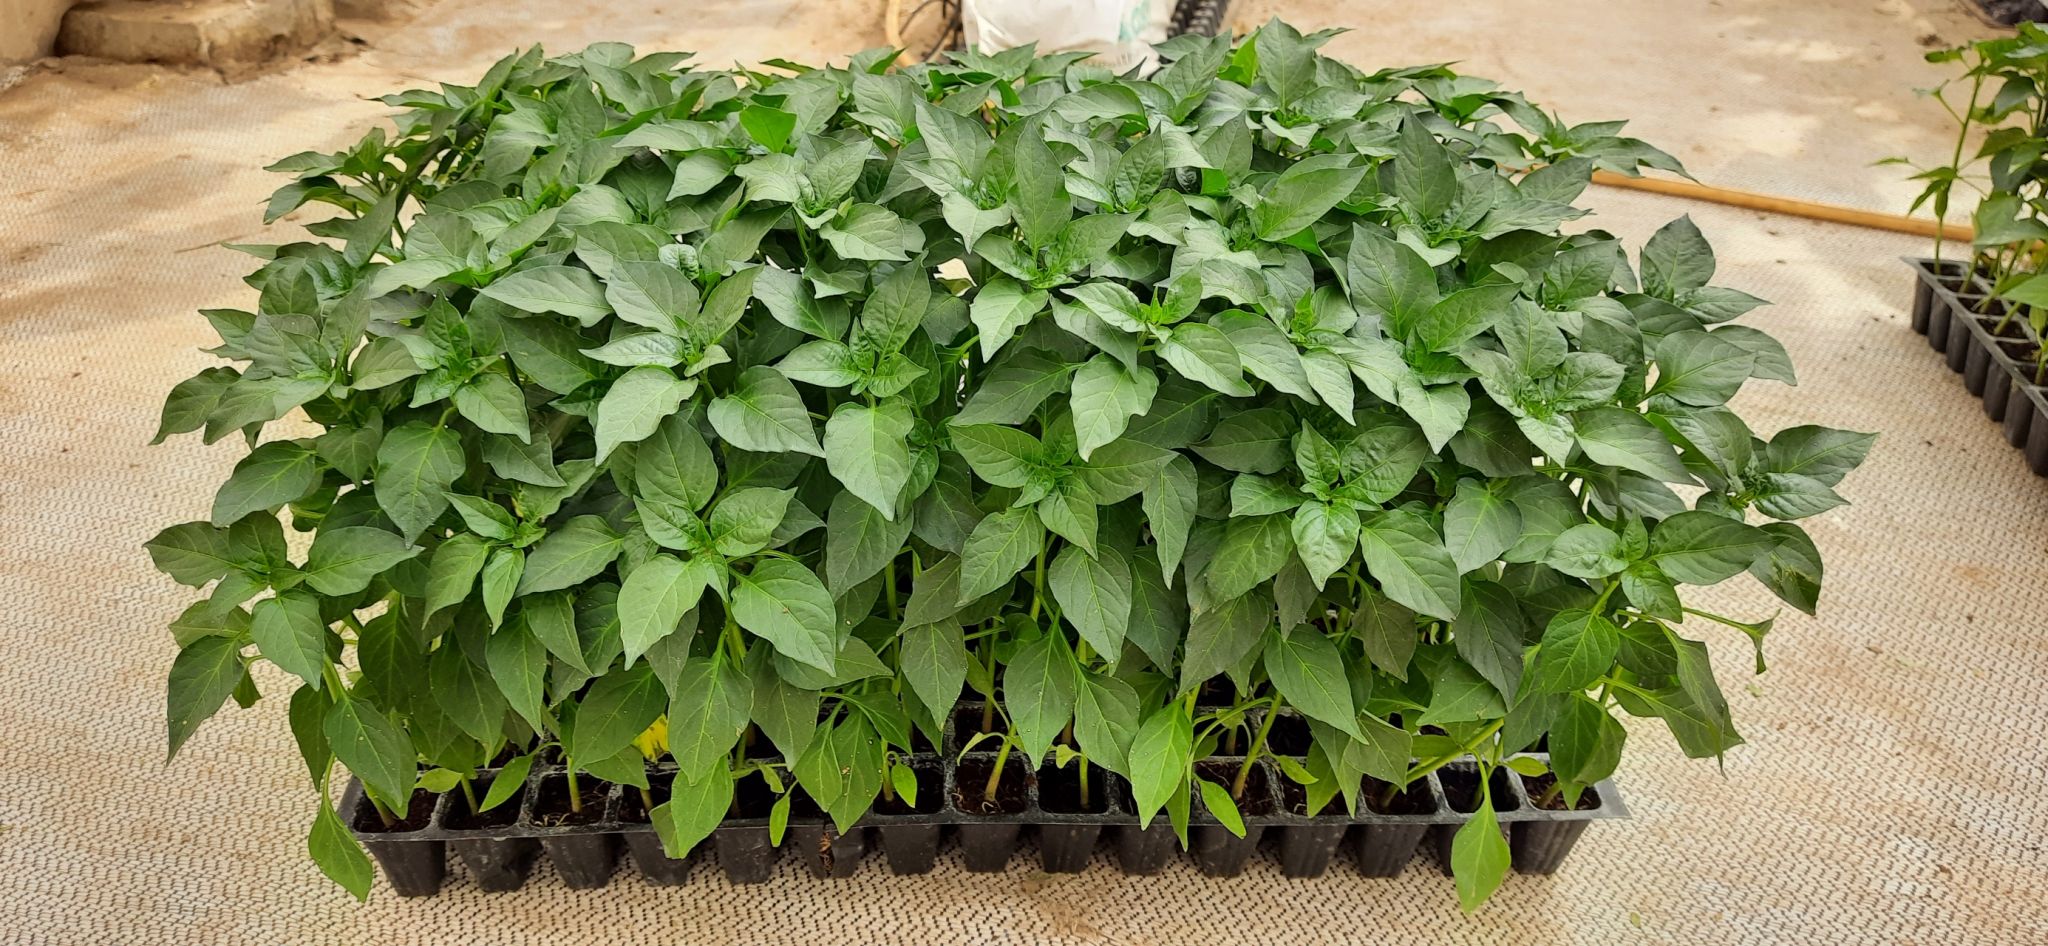 Capsicum Seedlings In A Tray